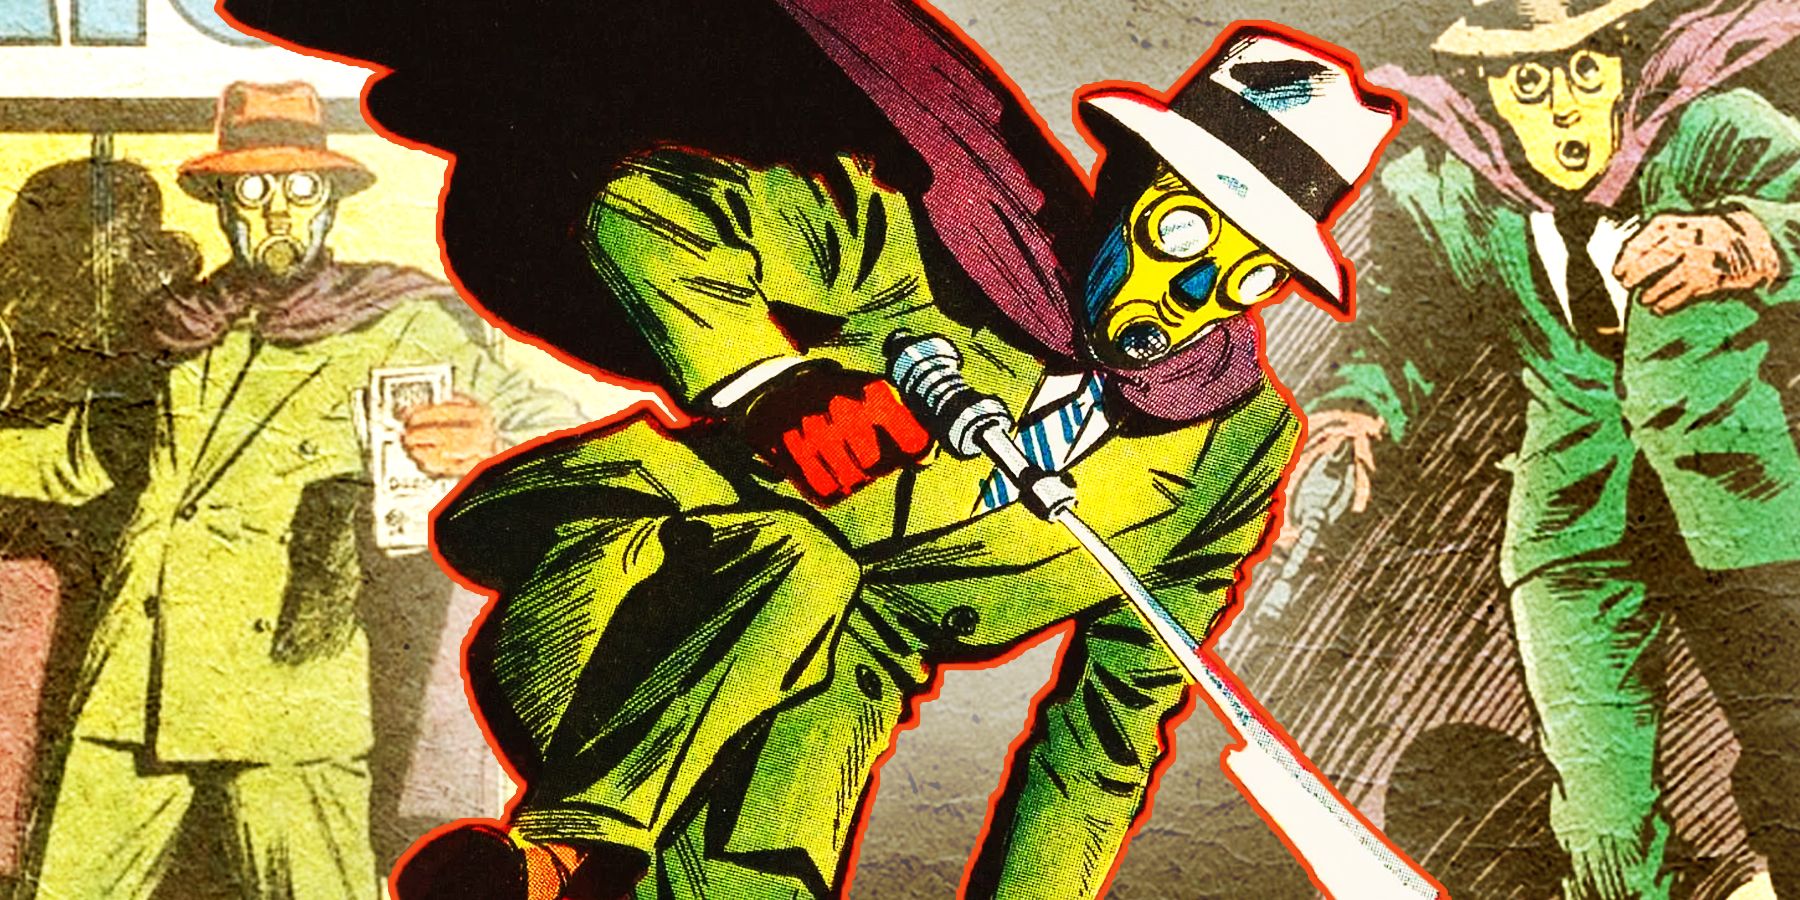 The Sandman as seen in DC's Golden Age comics